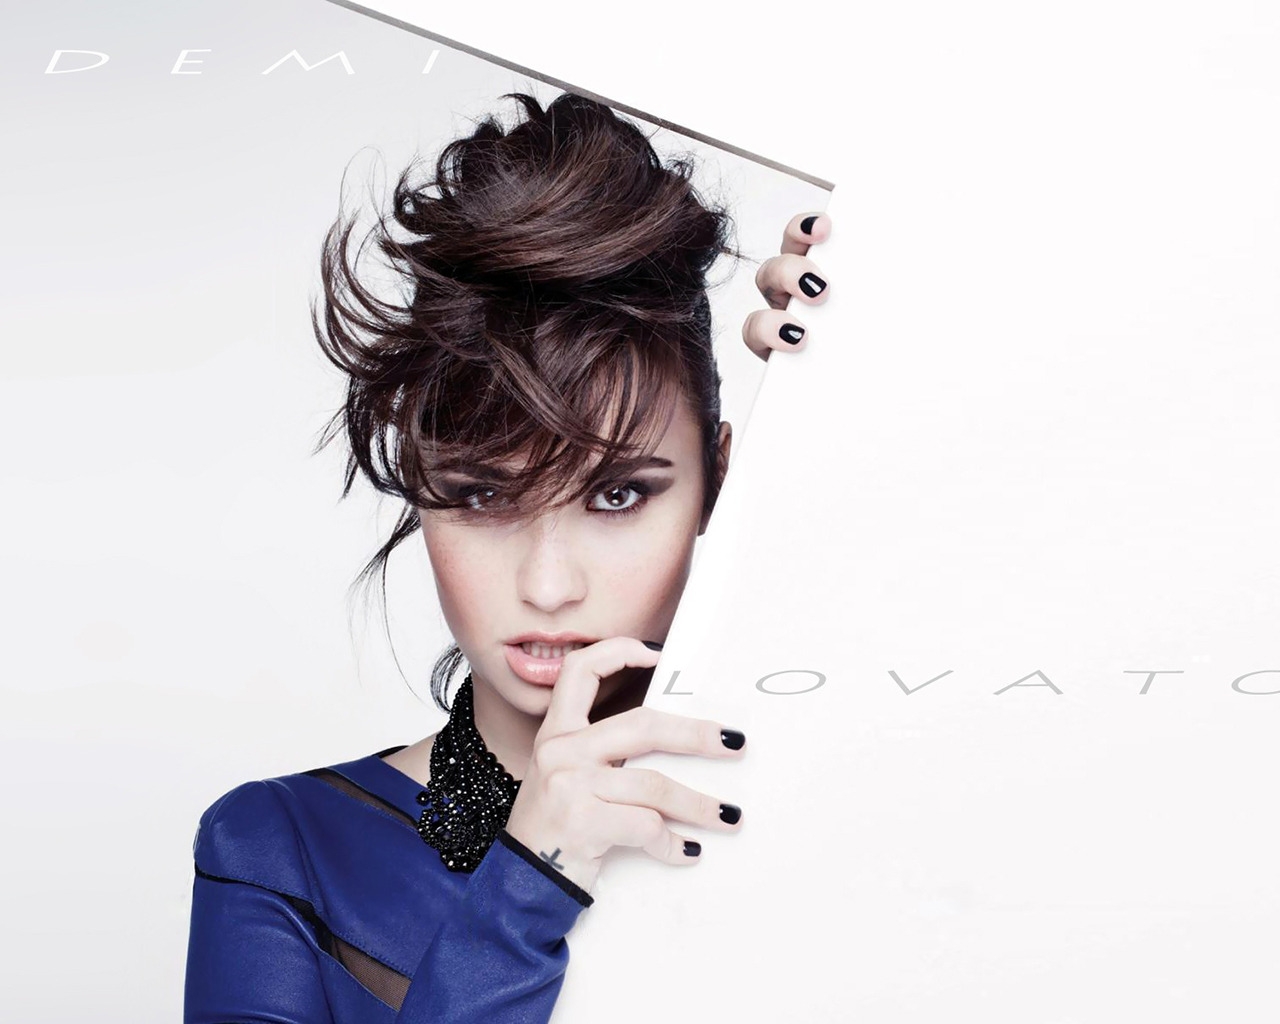 Superb Demi Lovato for 1280 x 1024 resolution